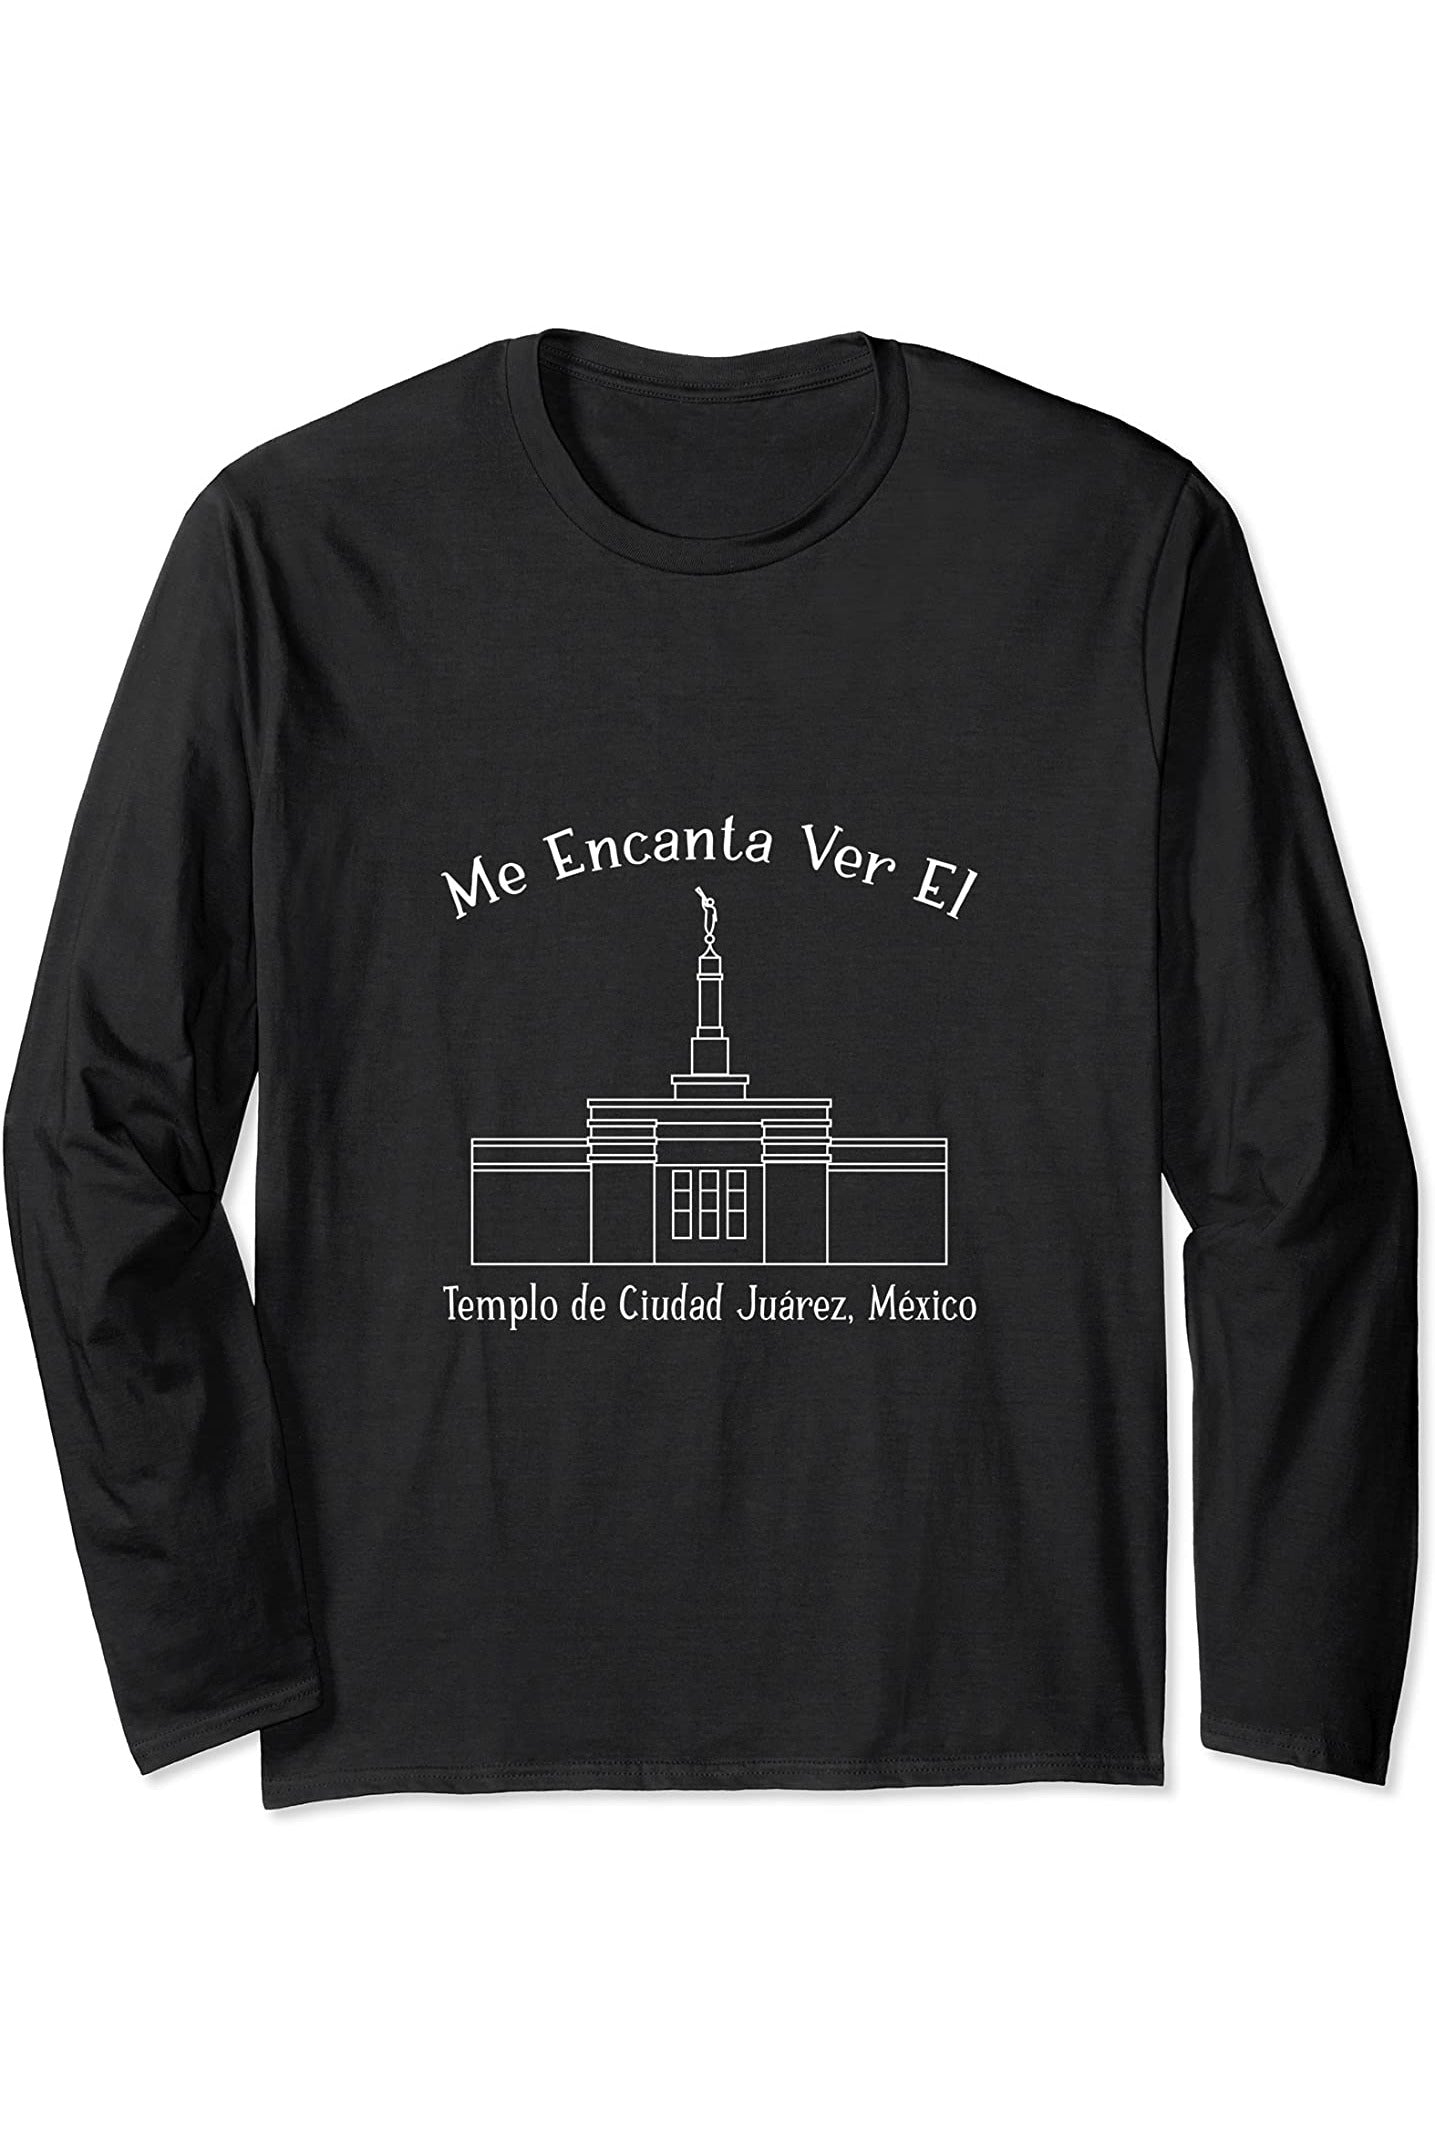 Ciudad Juarez Mexico Temple Long Sleeve T-Shirt - Happy Style (Spanish) US